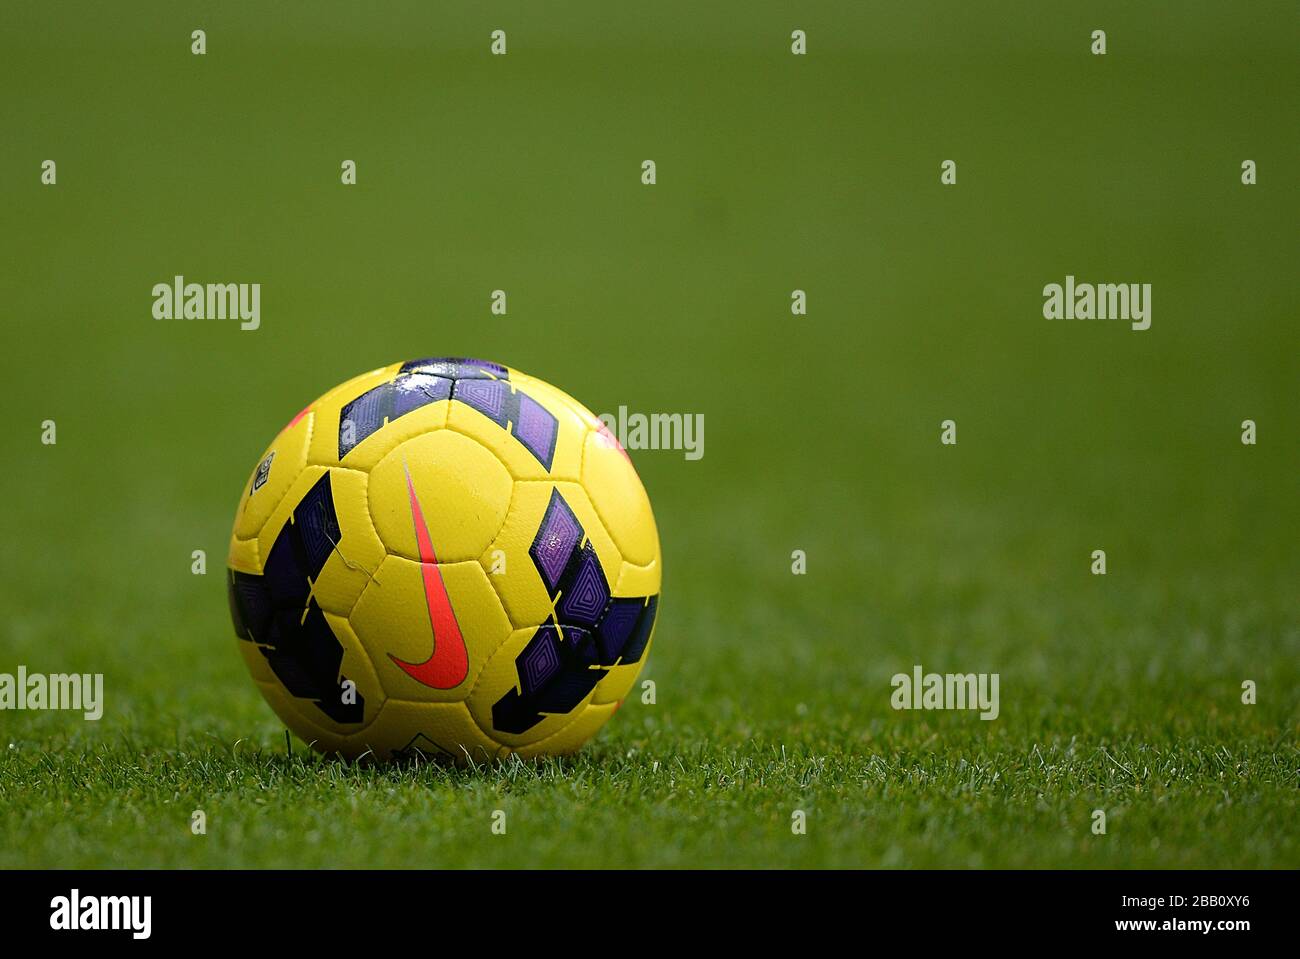 Nike Incyte match ball on the pitch Stock Photo - Alamy